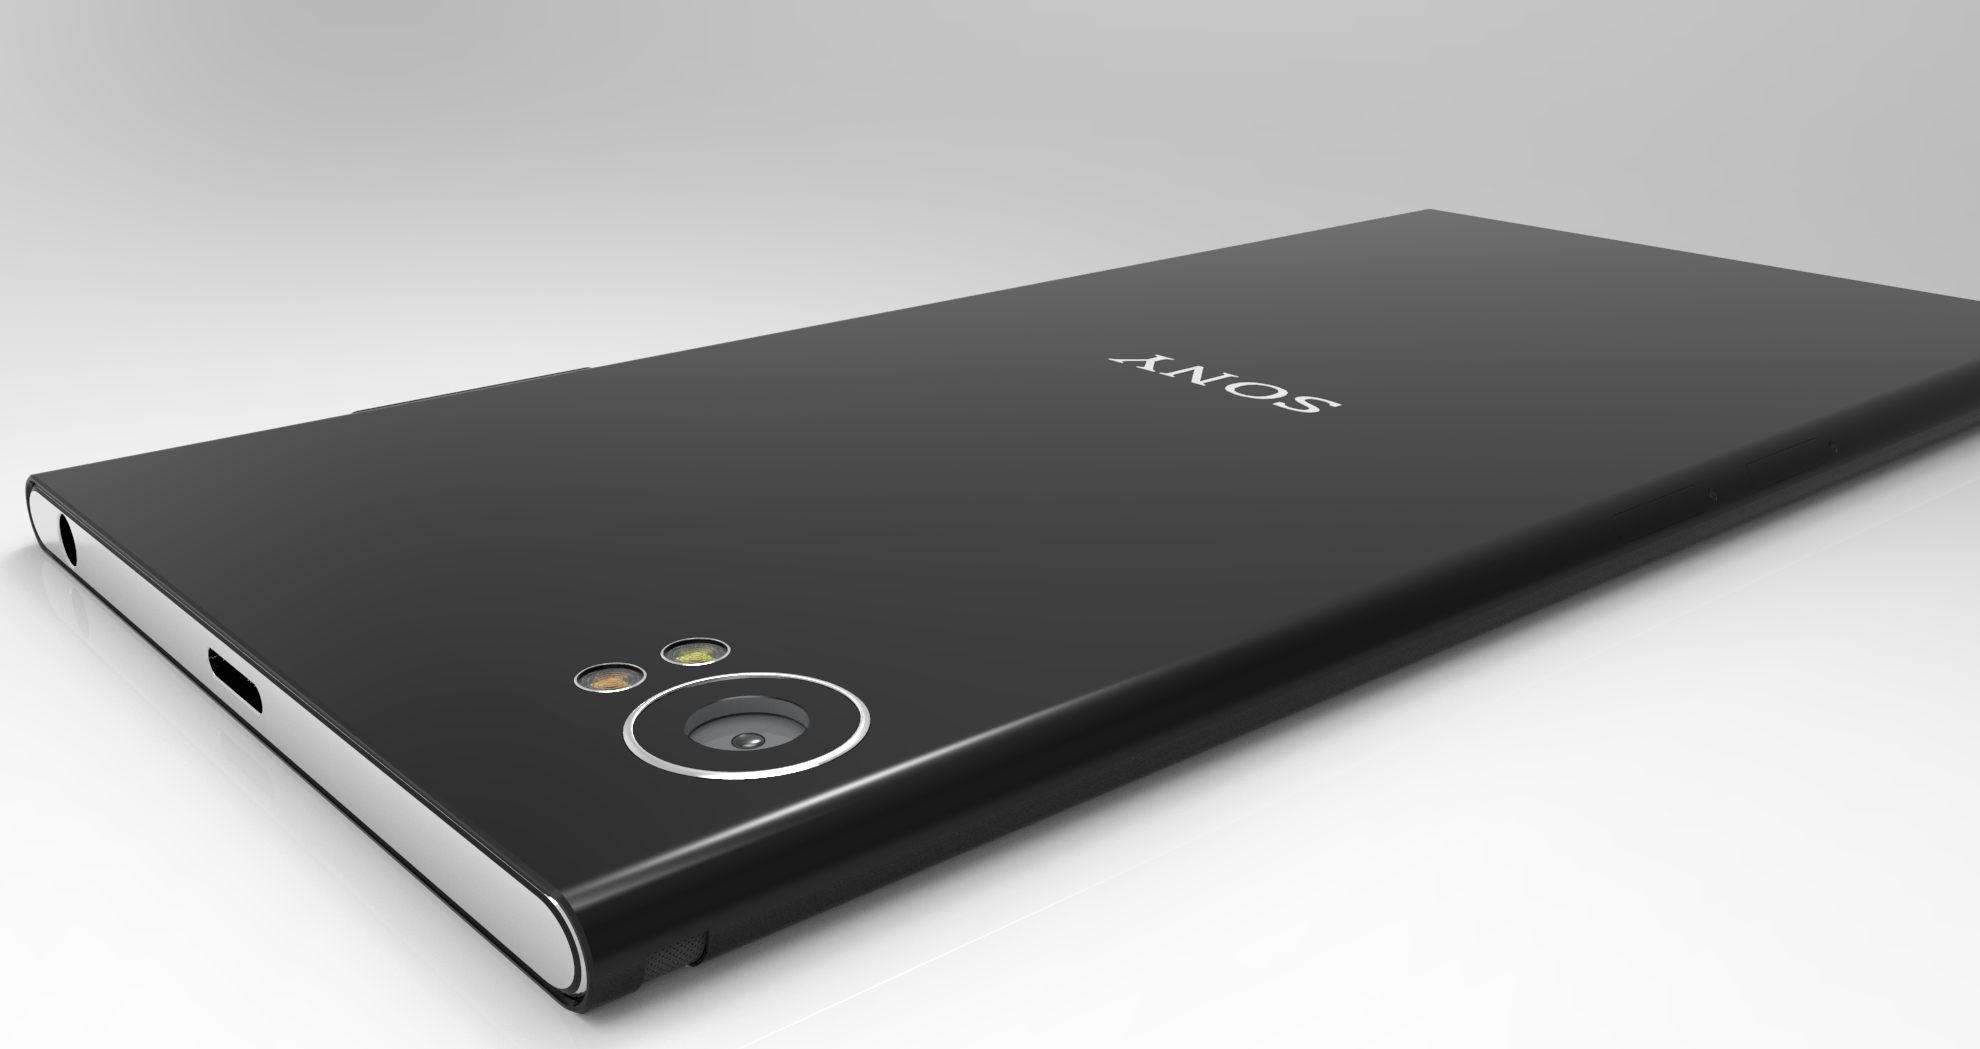 Sony Xperia Curve concept